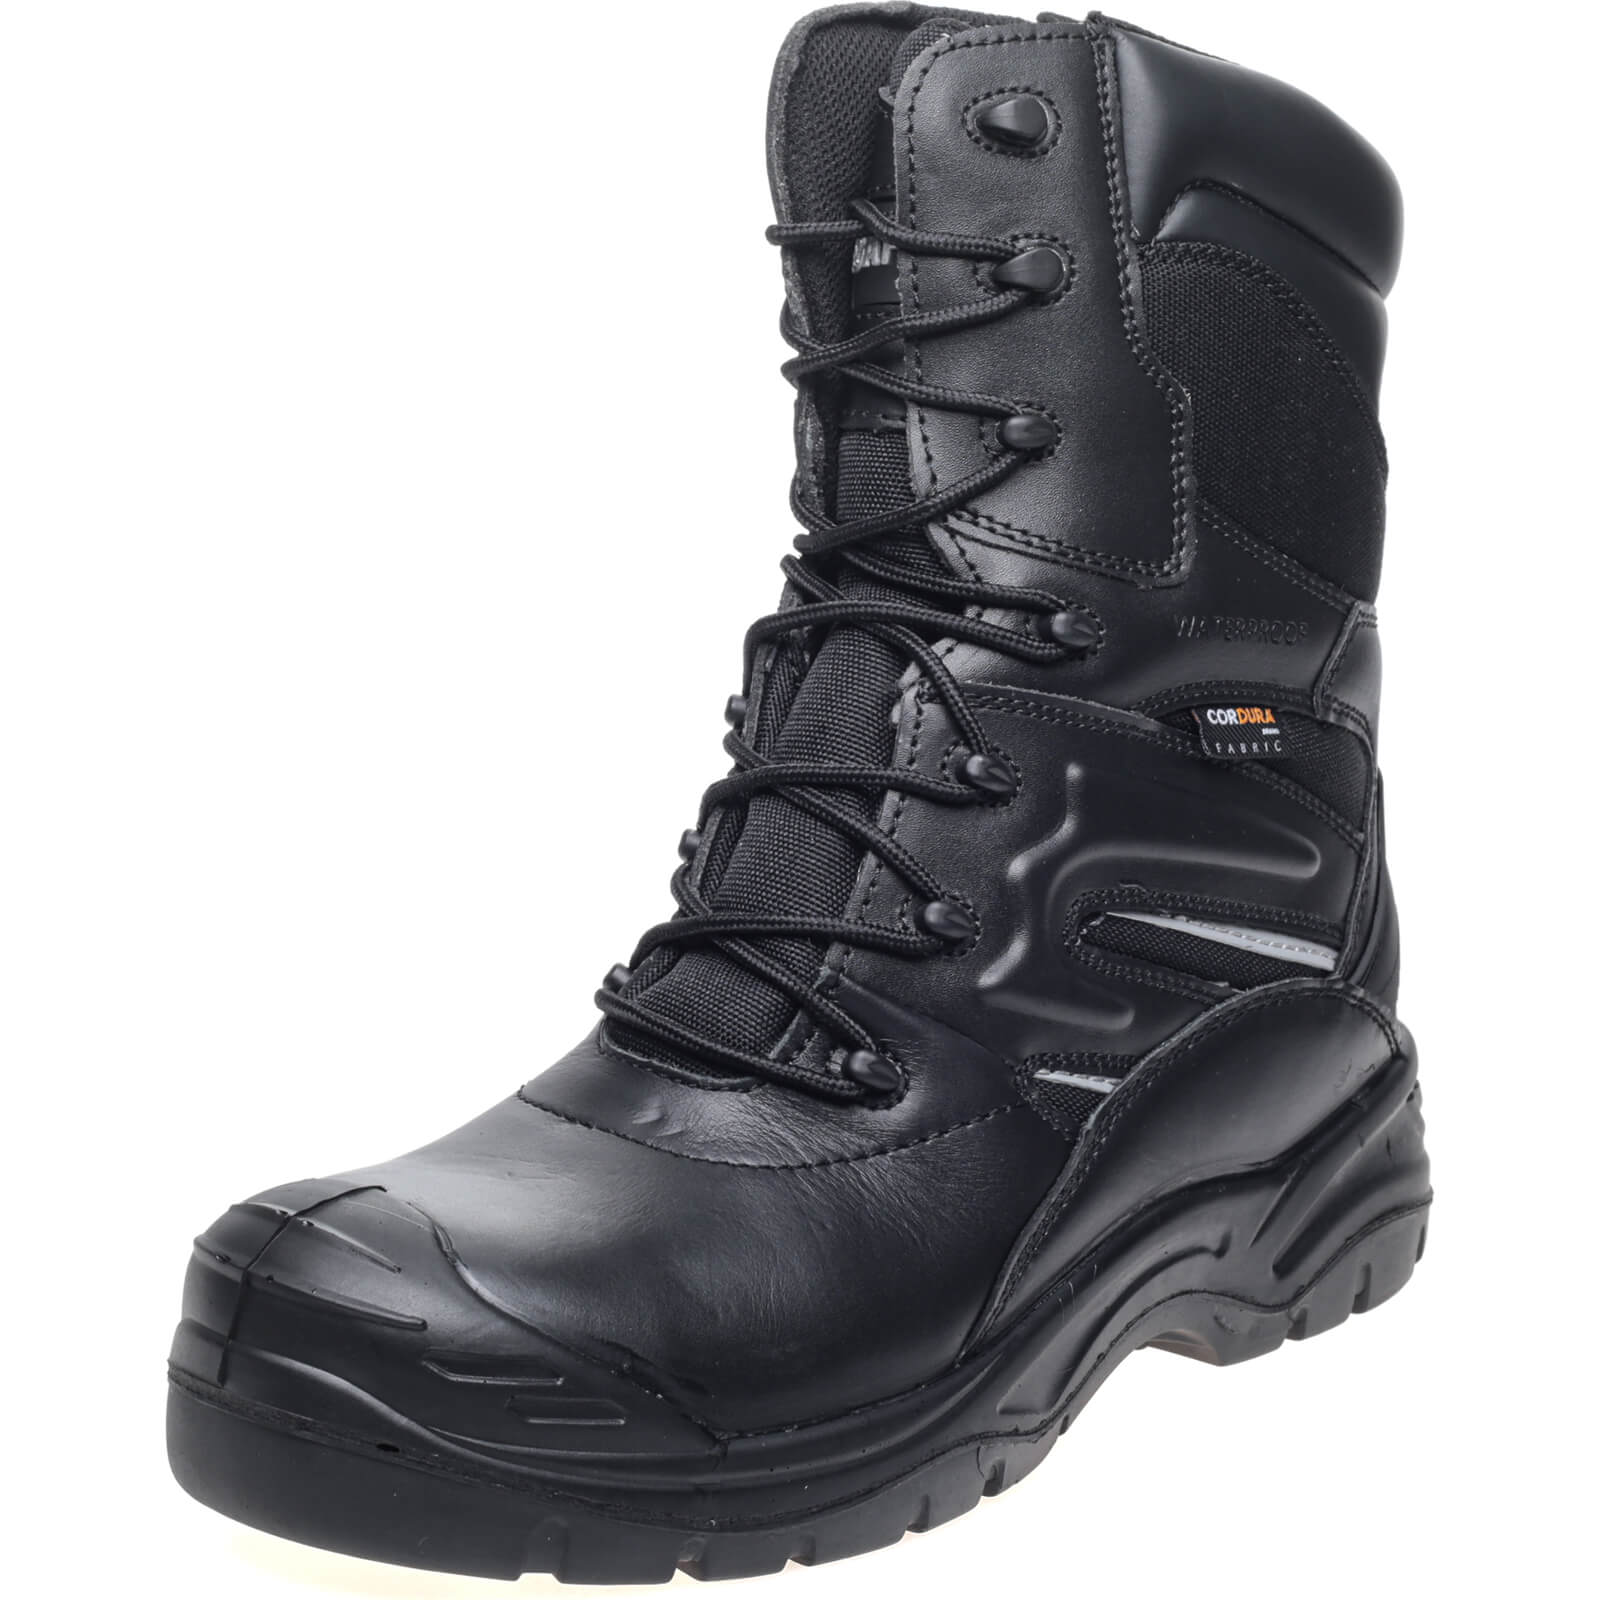 Image of Apache COMBAT Non Metallic High Leg Safety Boots Black Size 11